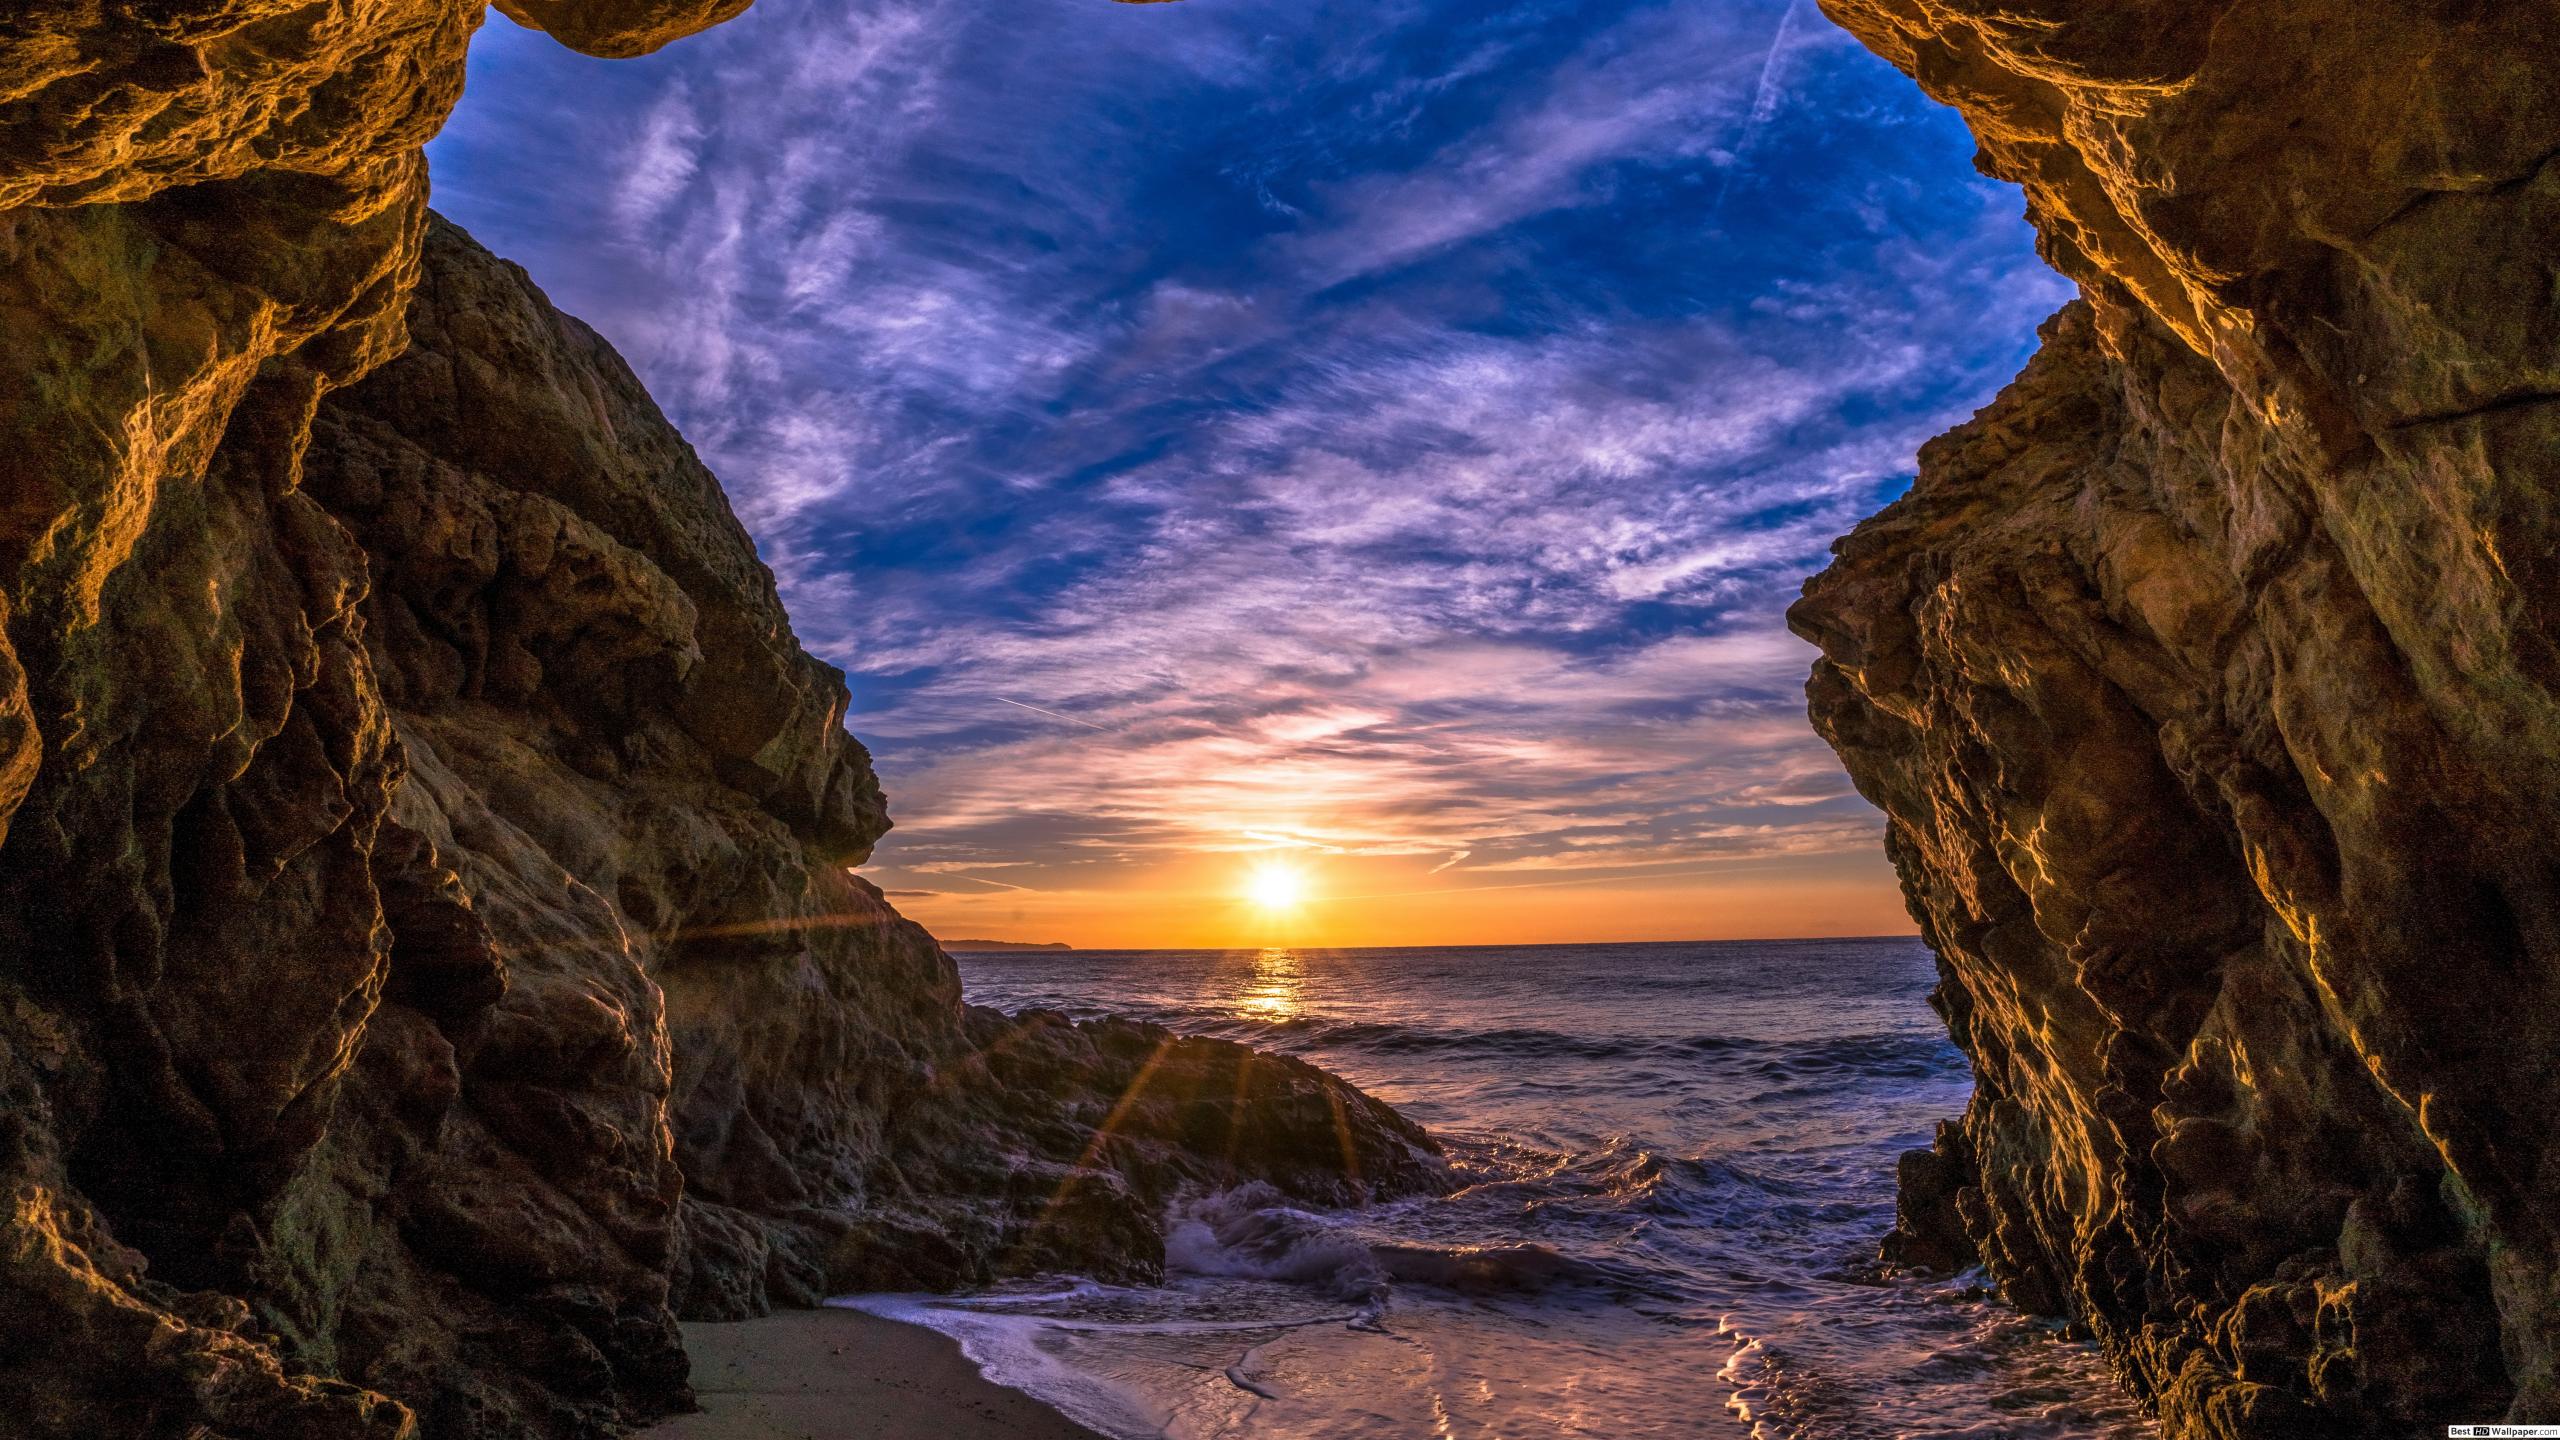 Beach Cave in Malibu, California HD wallpaper download